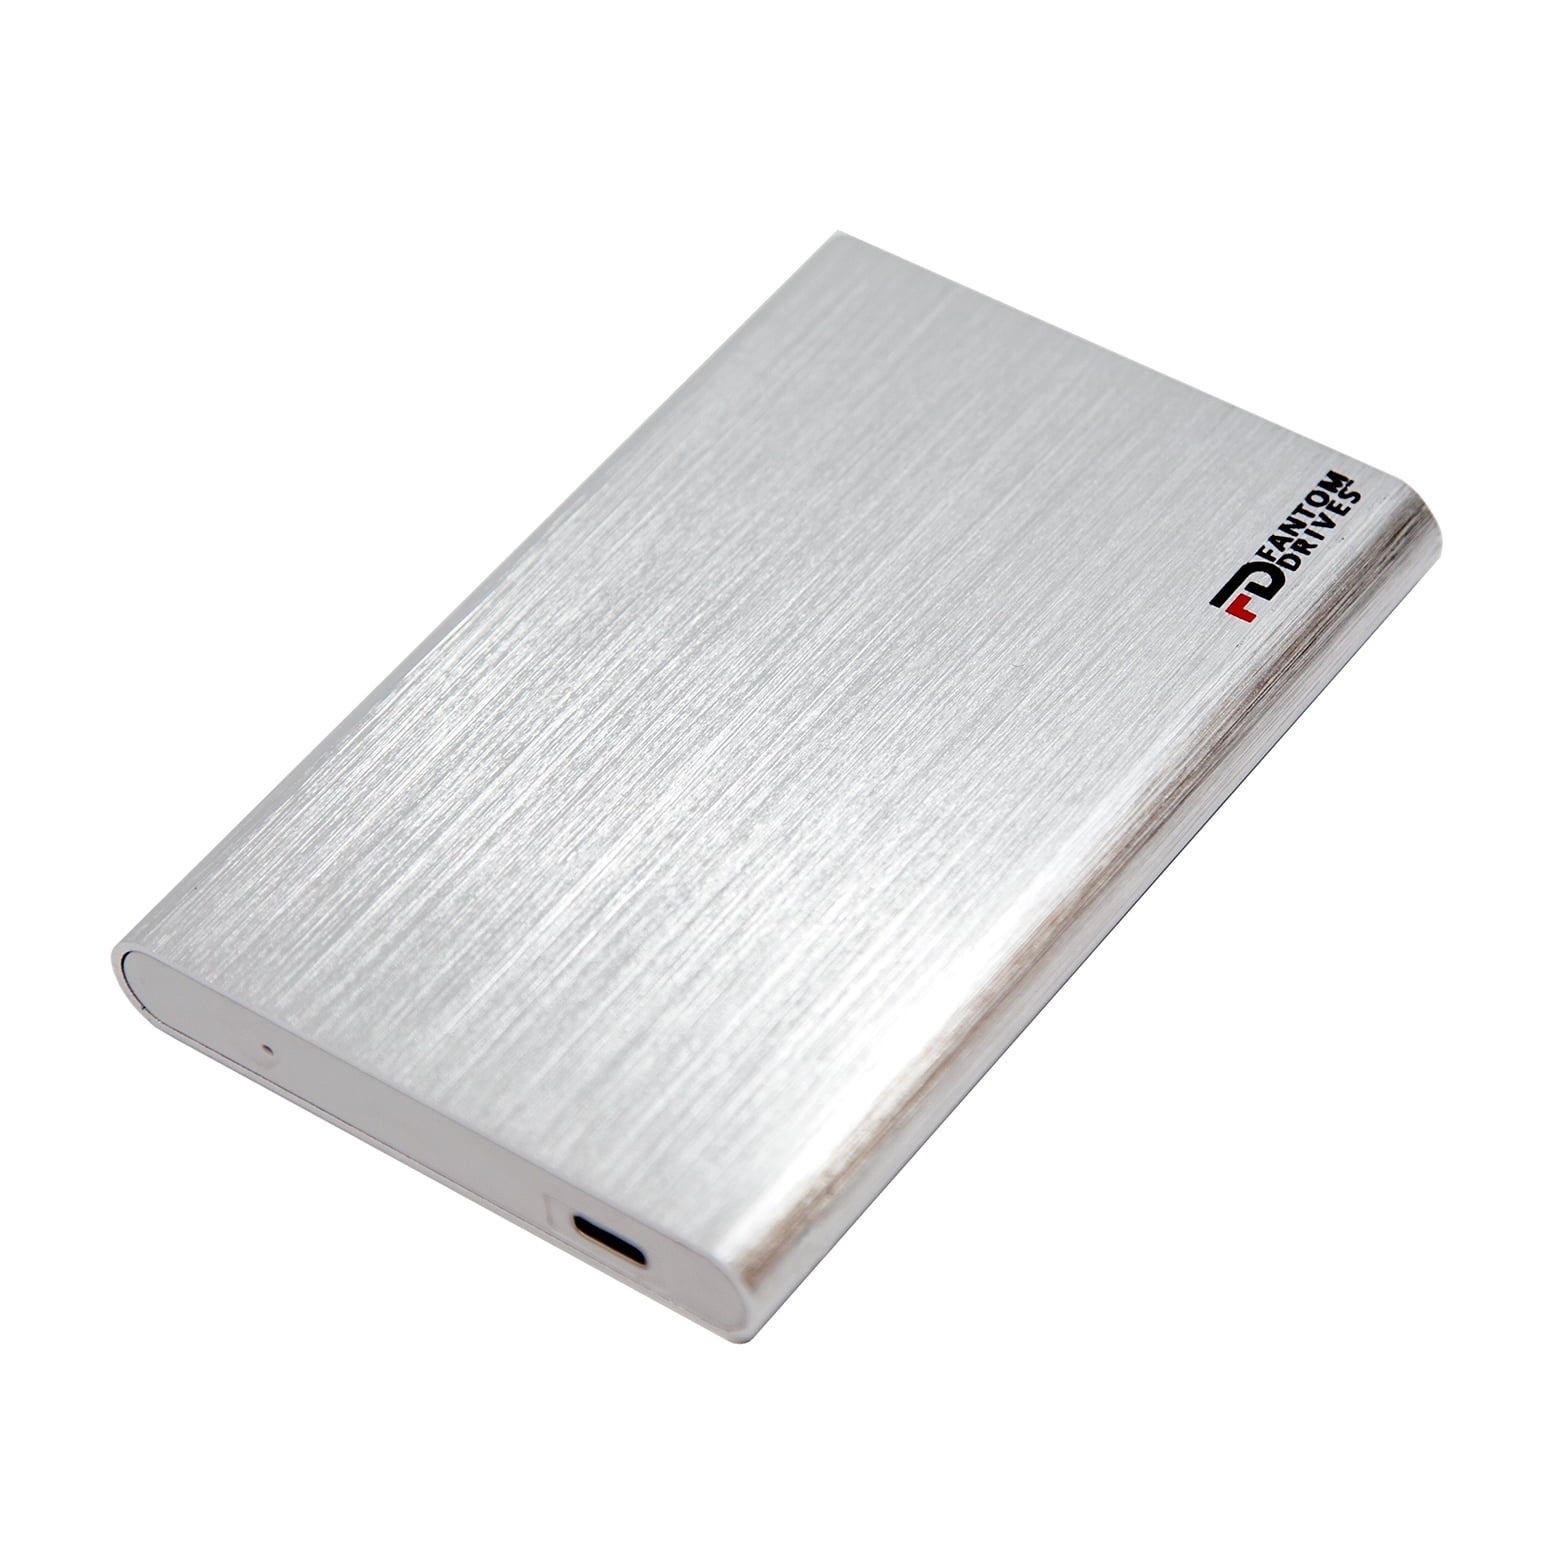 GFORCE 3.1 Portable SSD Series Fantom Drives External SSD 240GB USB 3.1 Gen 2 Type-C 10Gb/s Black Mac 